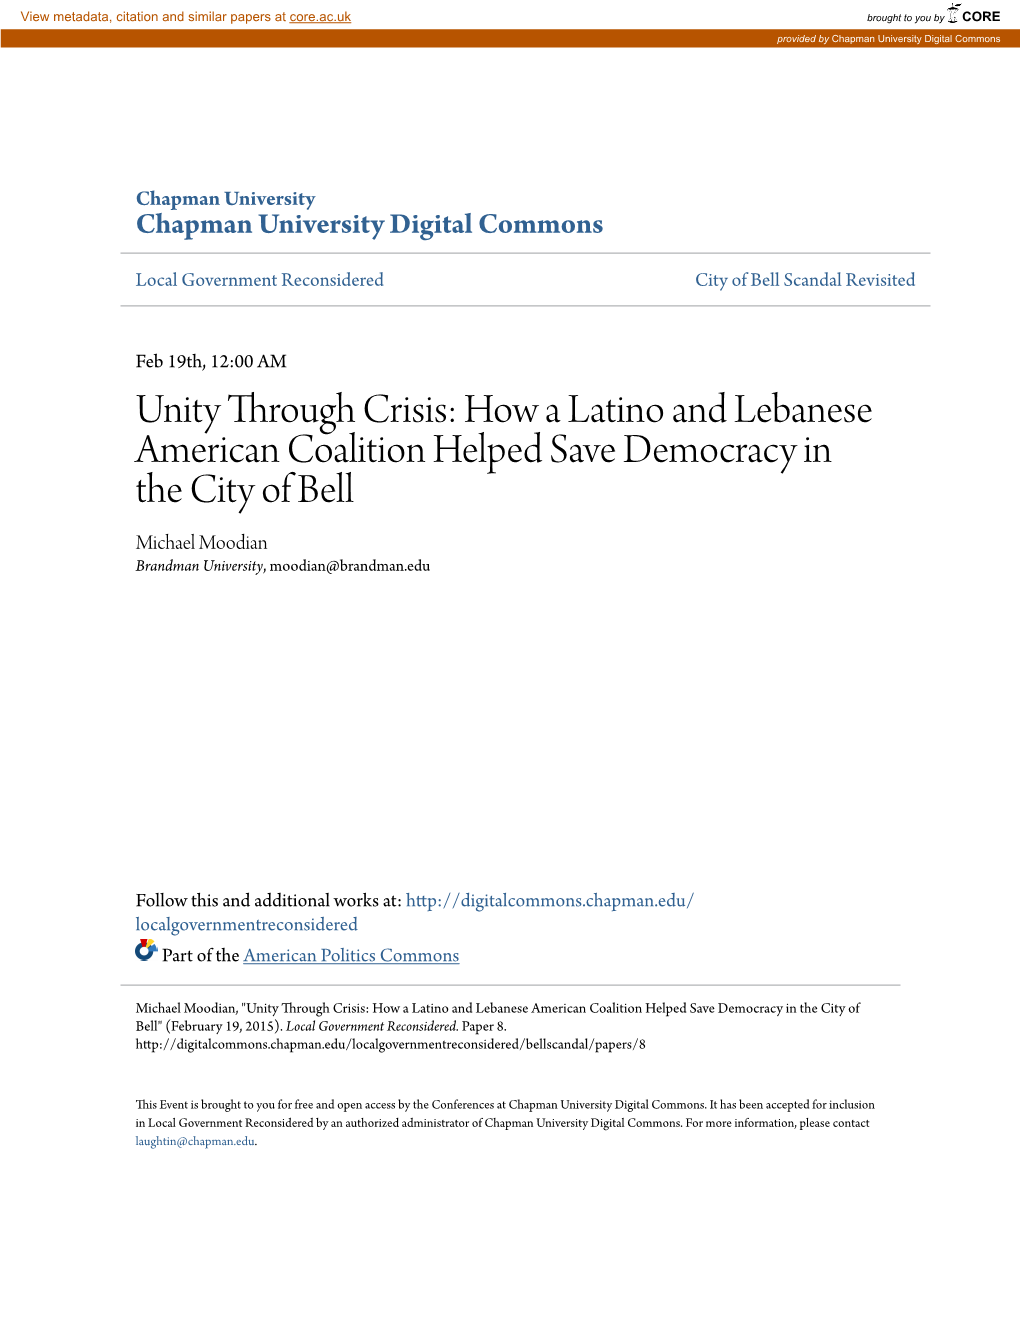 Unity Through Crisis: How a Latino and Lebanese American Coalition Helped Save Democracy in the City of Bell Michael Moodian Brandman University, Moodian@Brandman.Edu